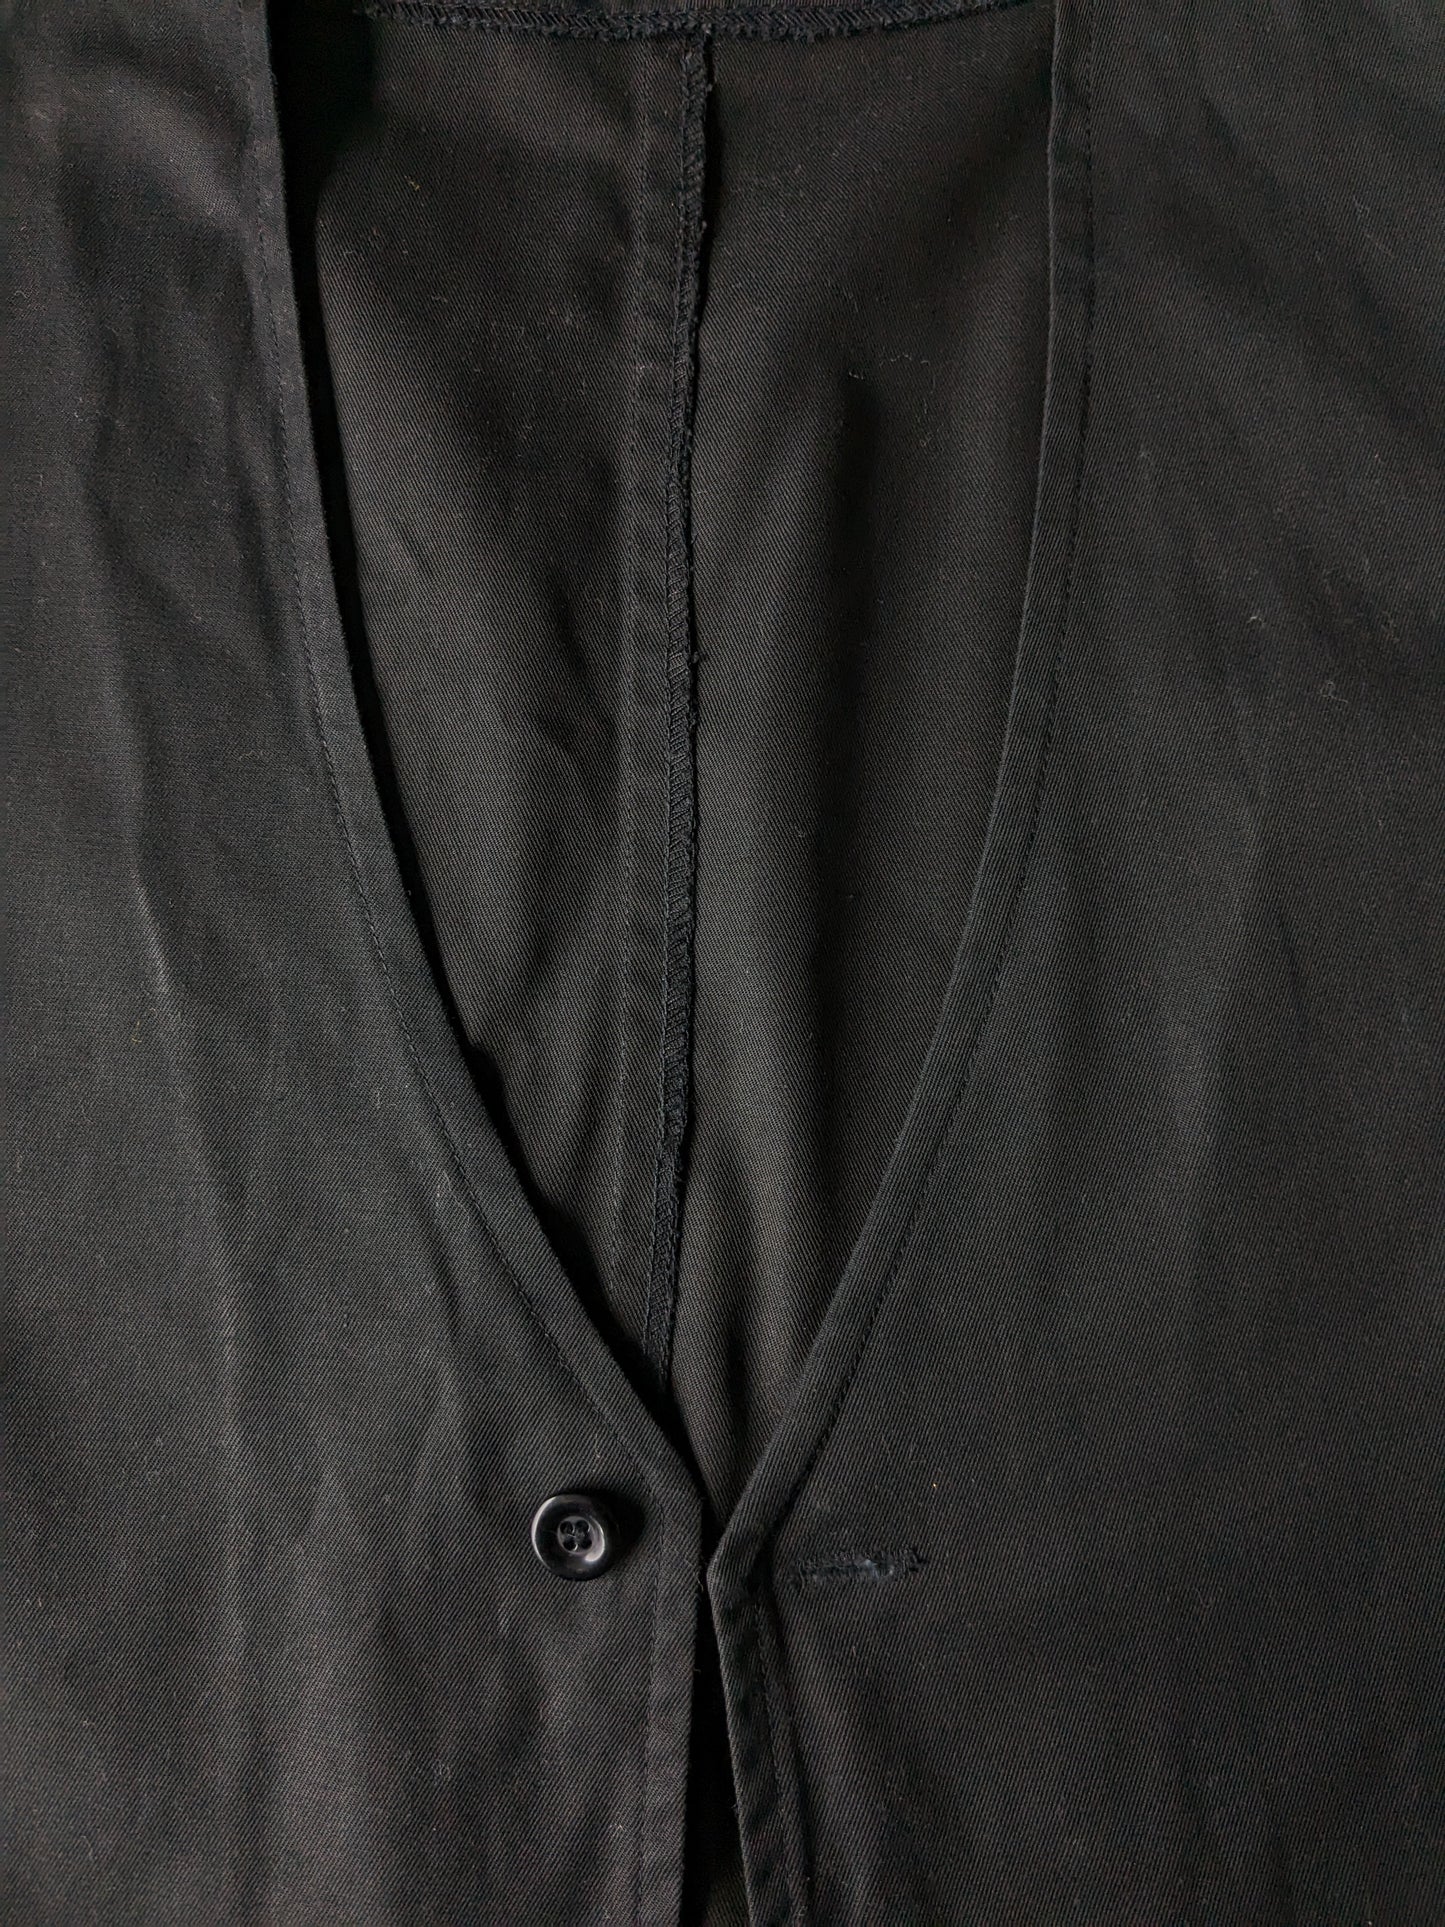 Chalea con bolsas. Color negro. Tamaño M. #333.